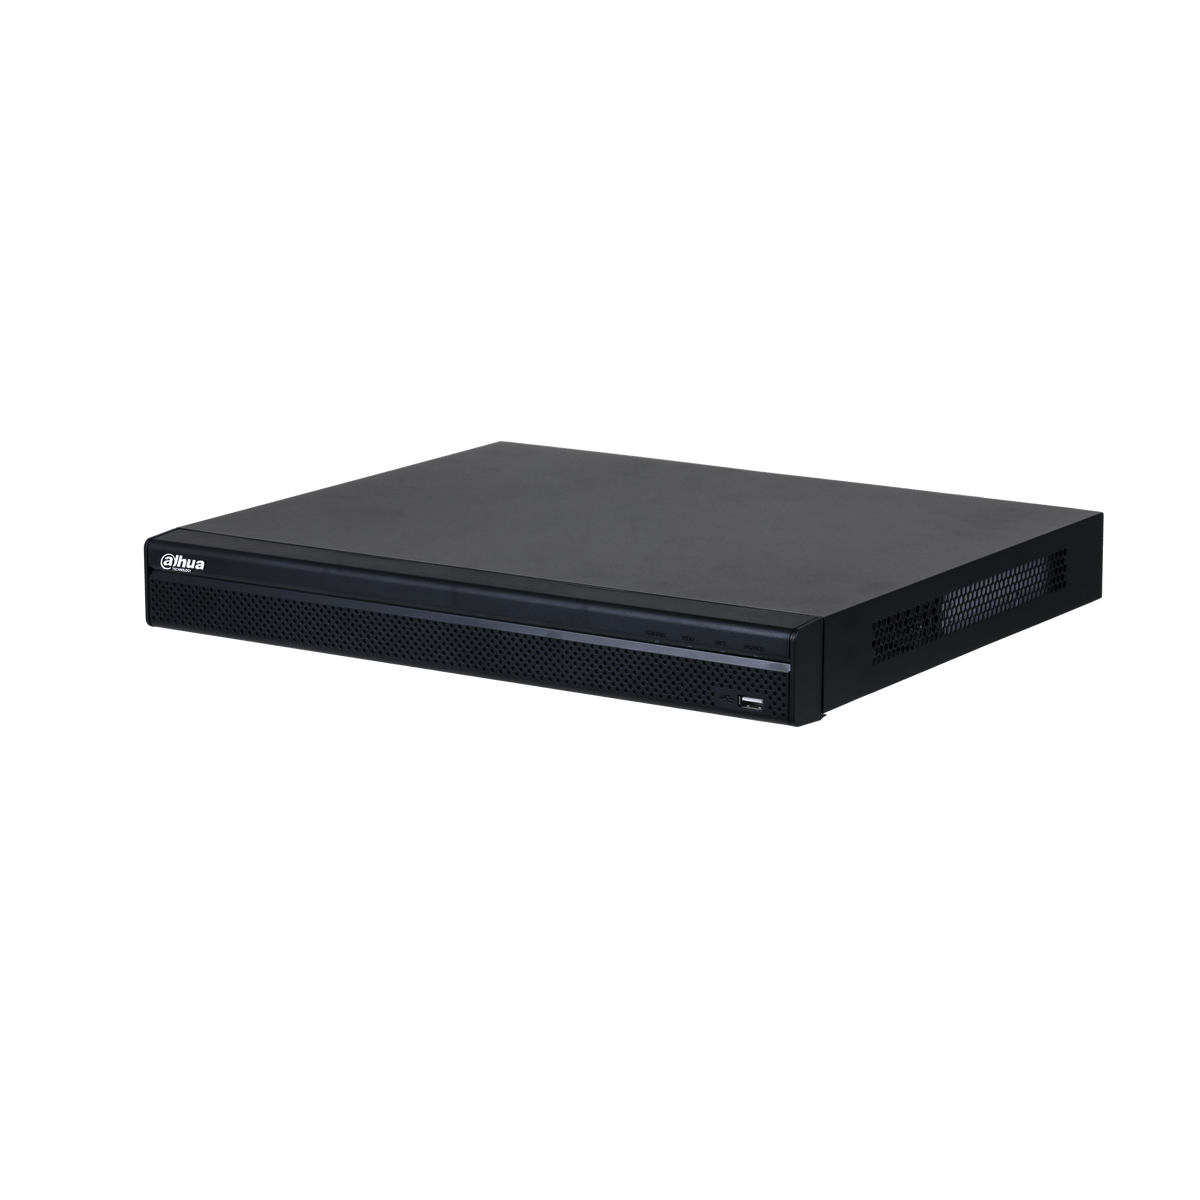 DAHUA NVR4232-4KS2/L 32 Channel 1U 2HDDs Network Video Recorder